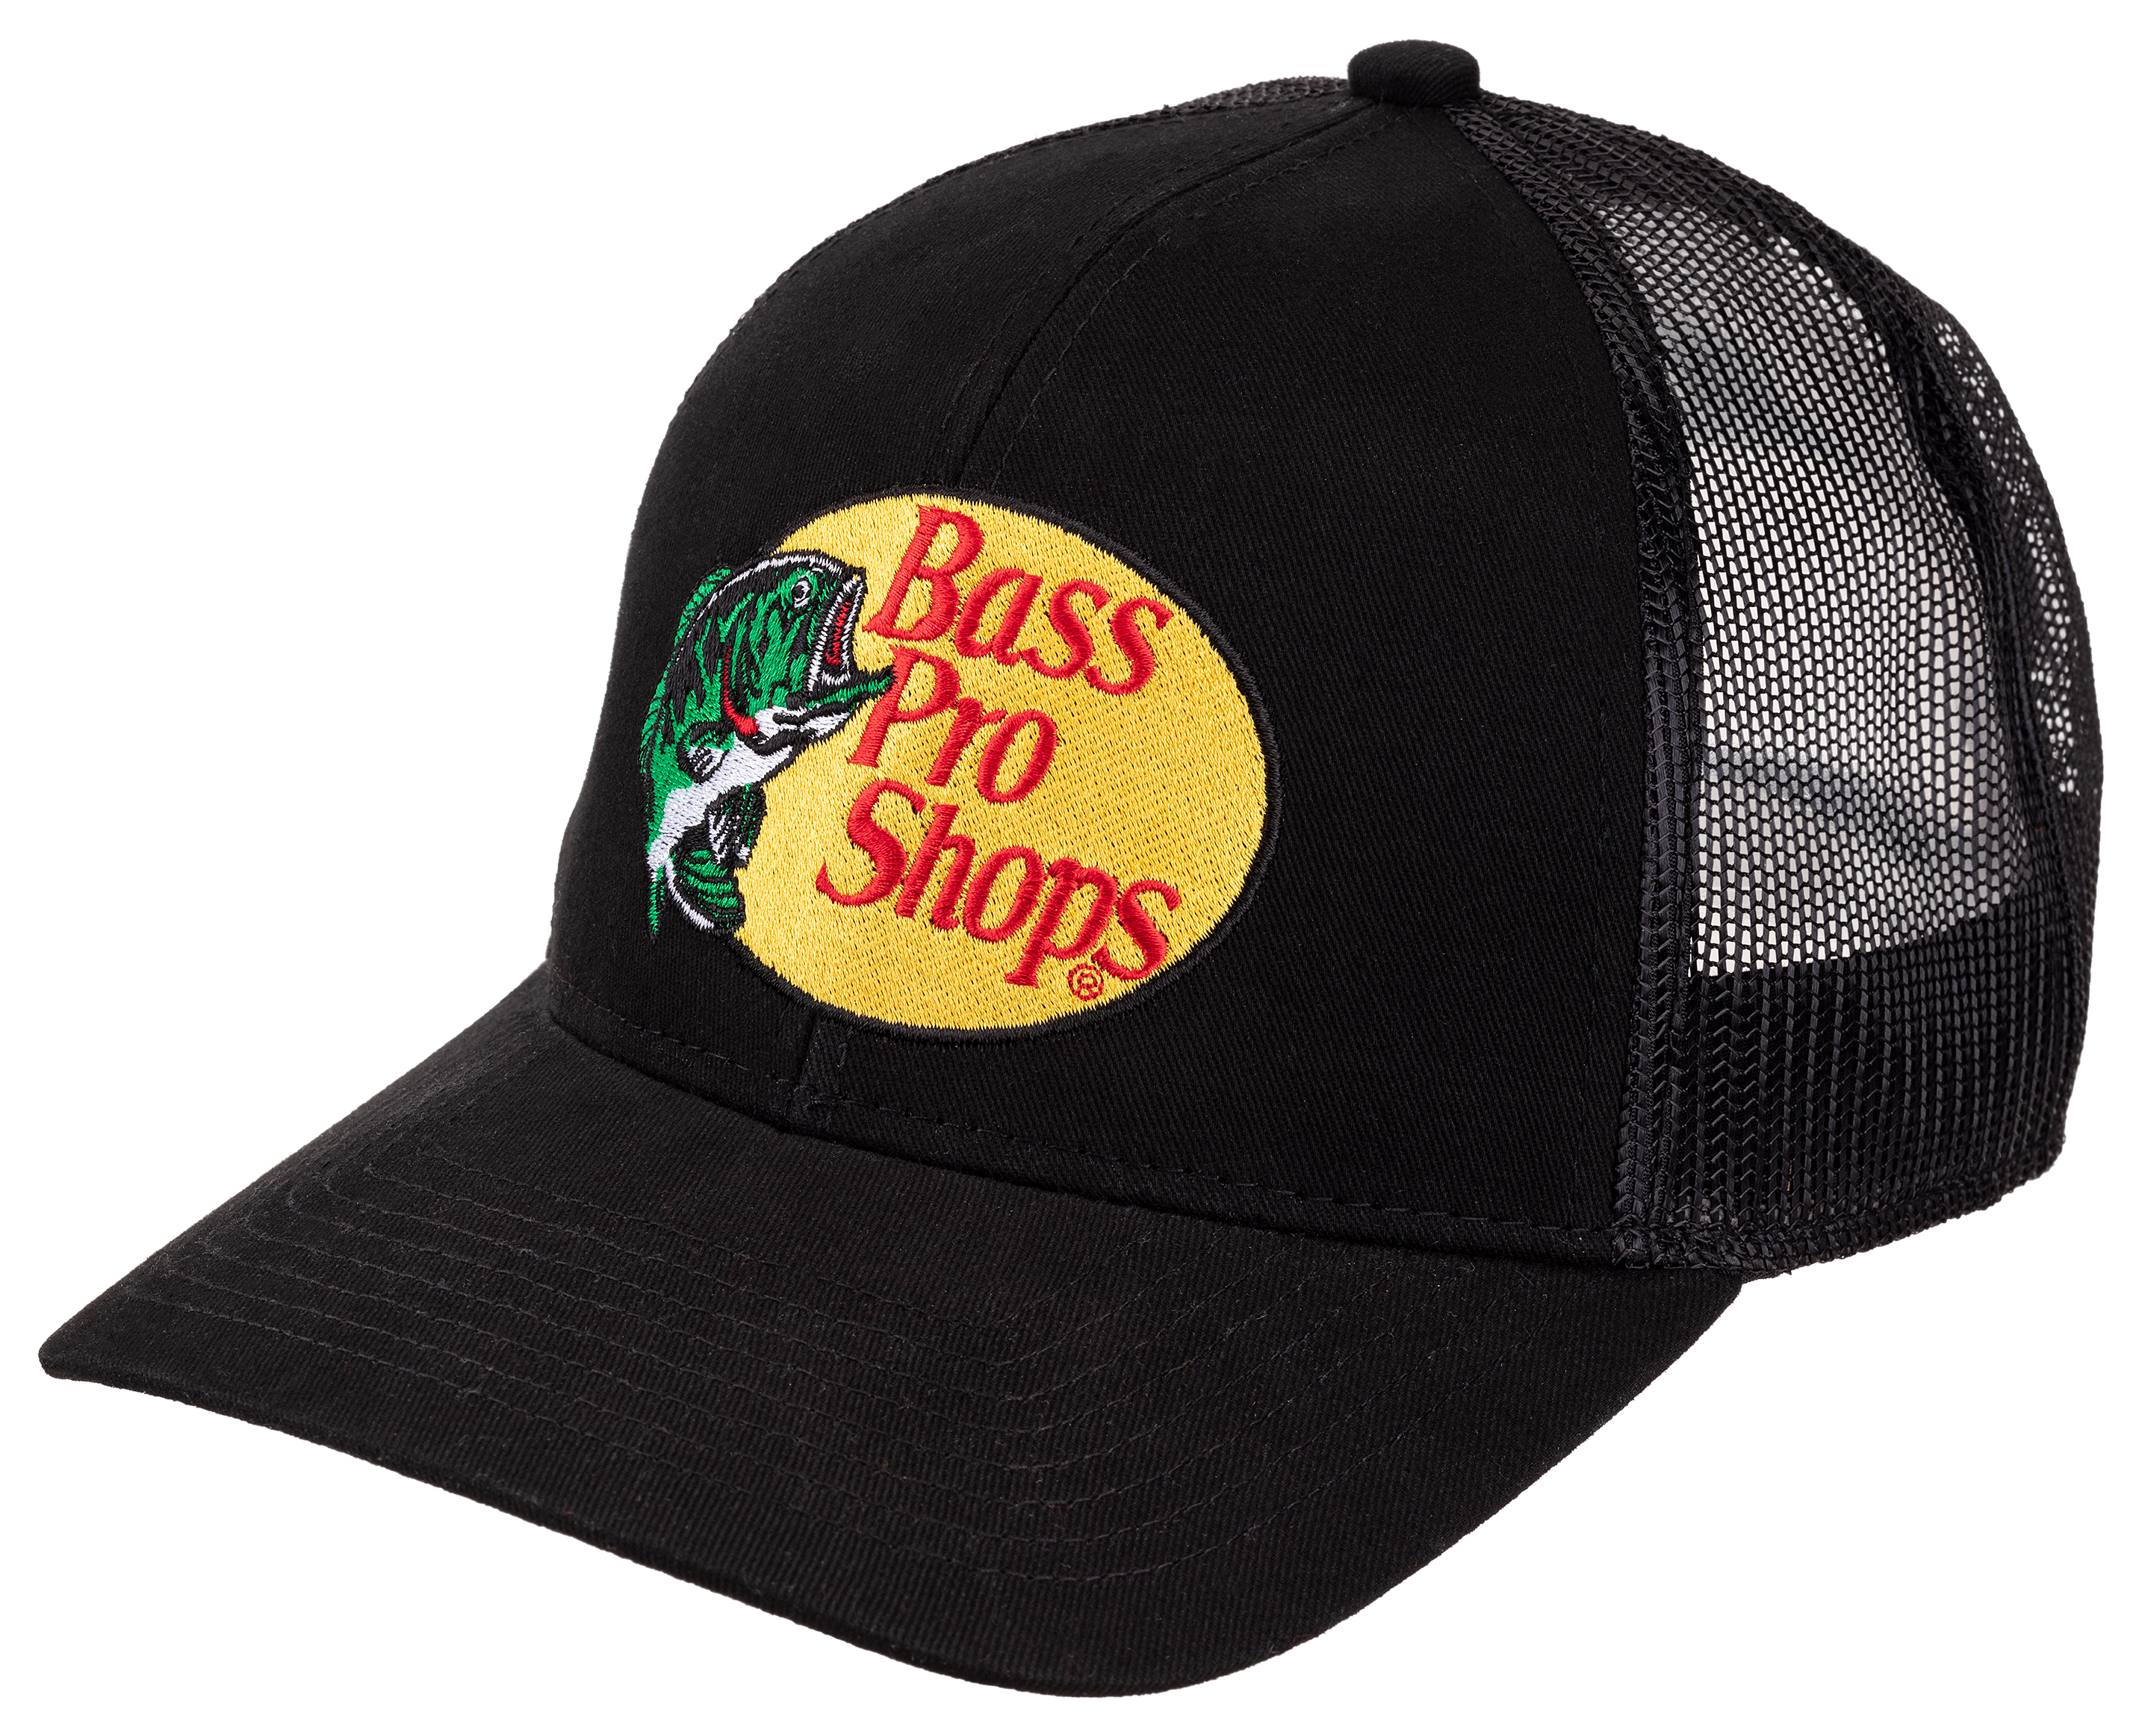 Bass Pro Shops Leaping Bass Logo Cap